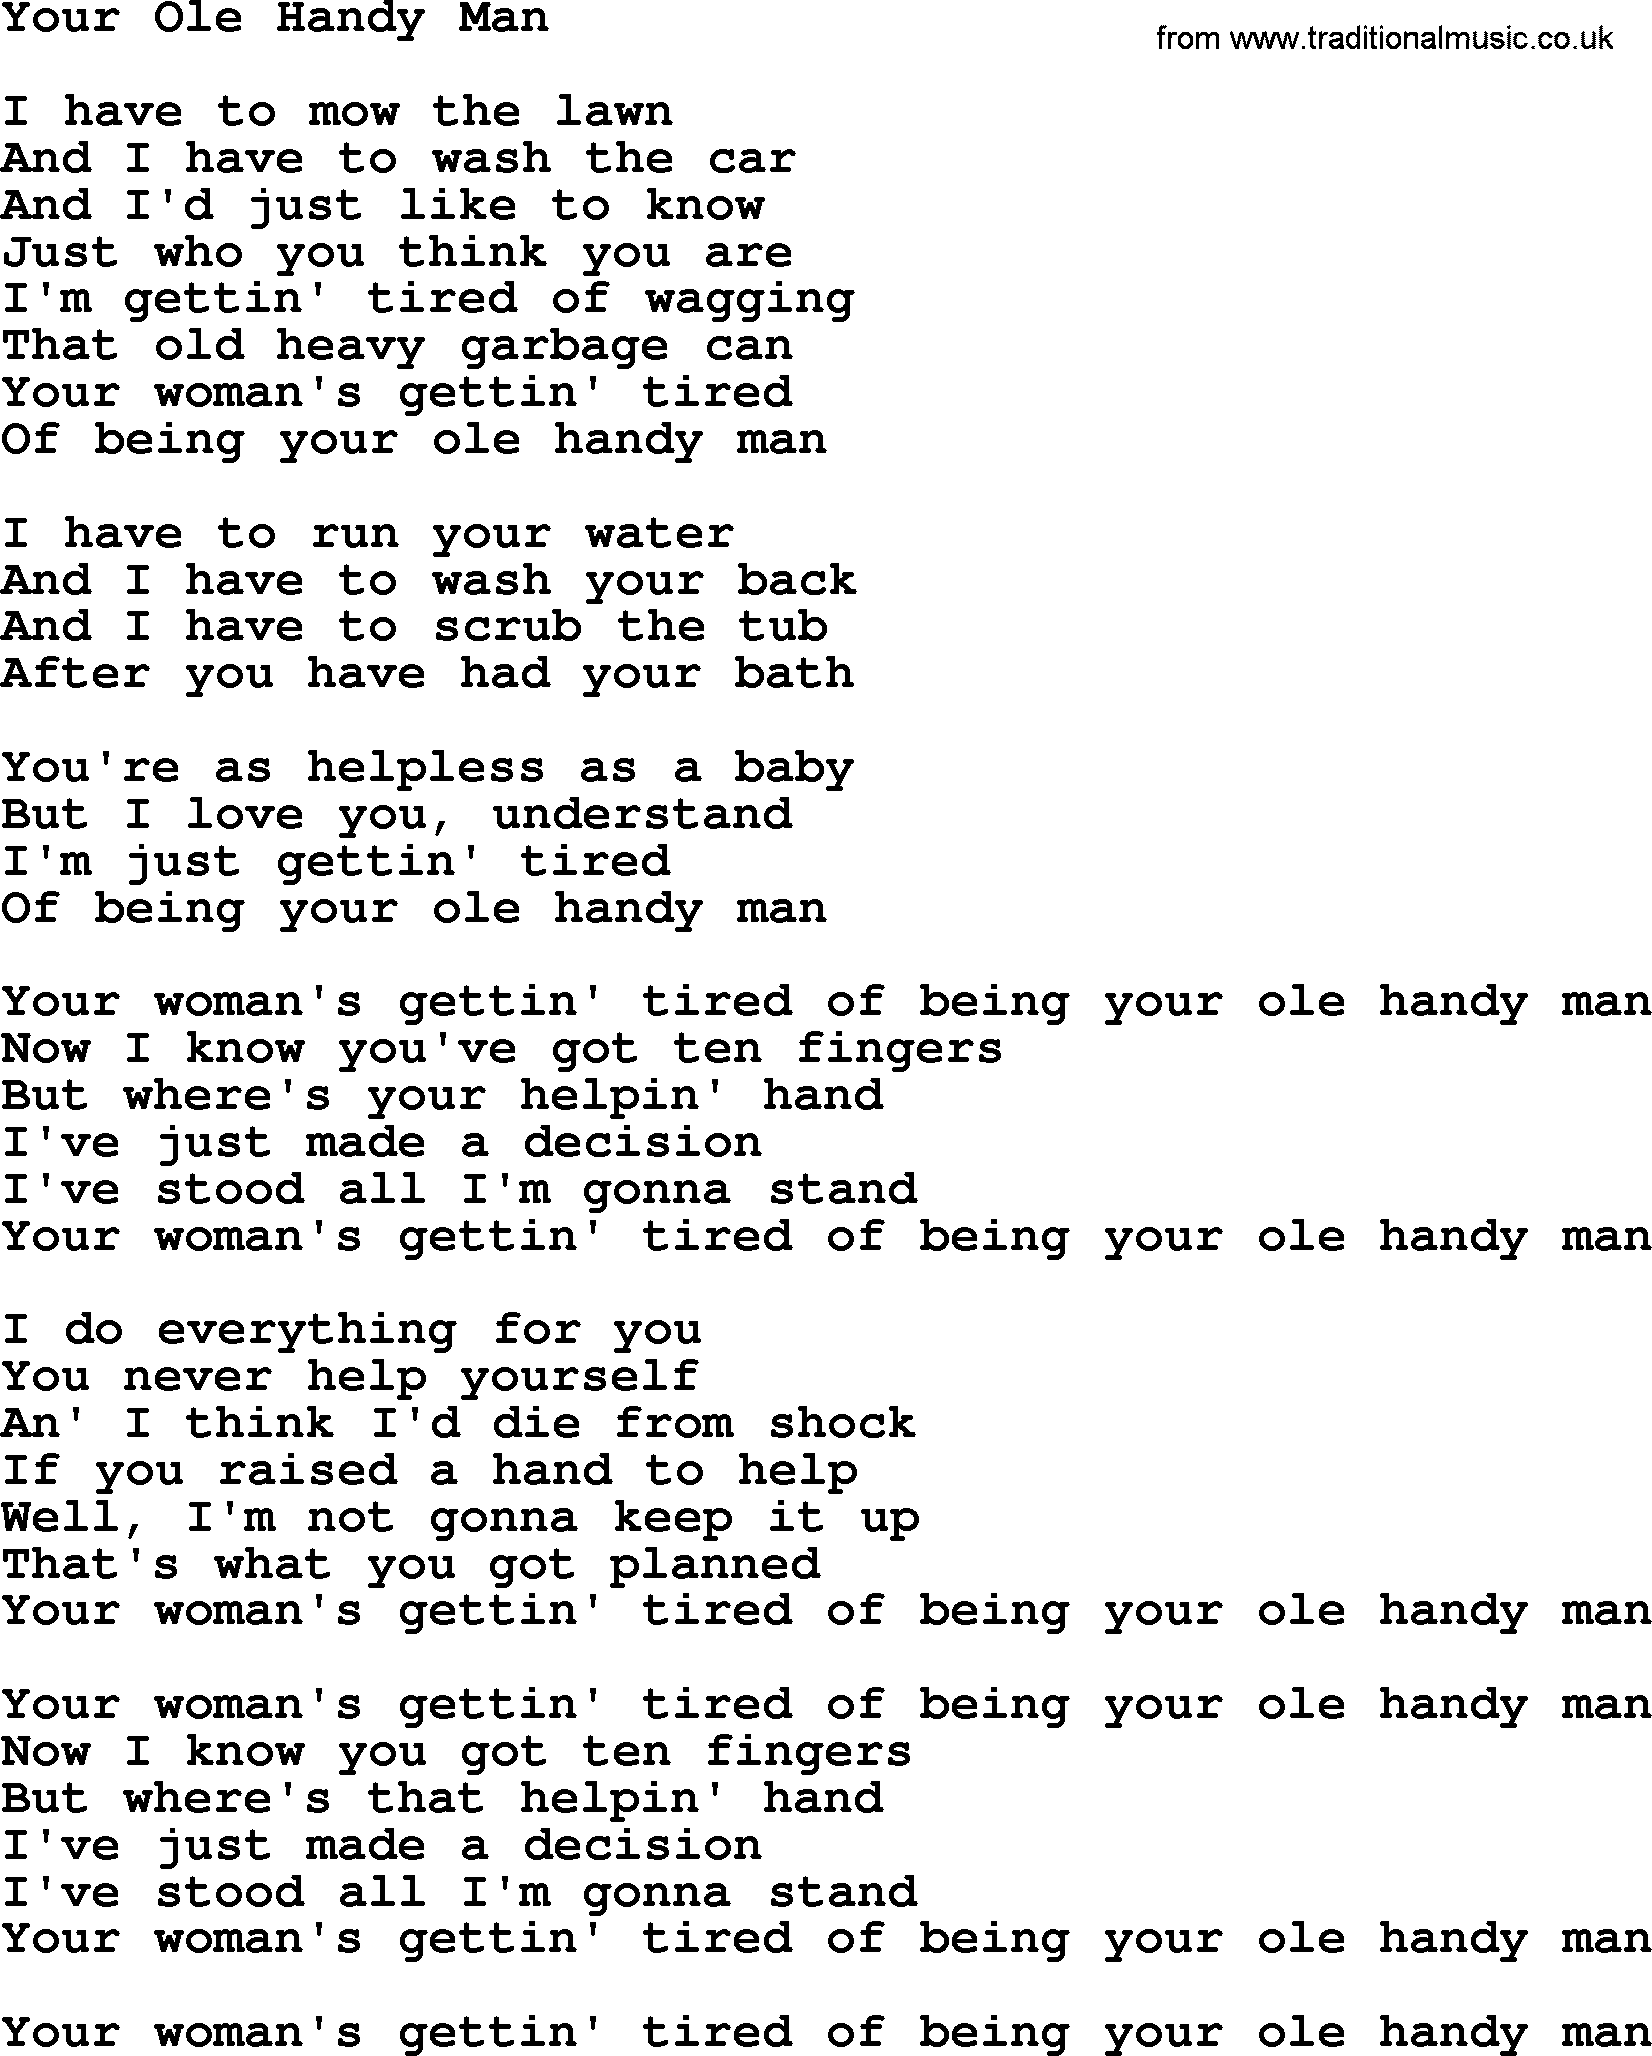 Dolly Parton song Your Ole Handy Man.txt lyrics